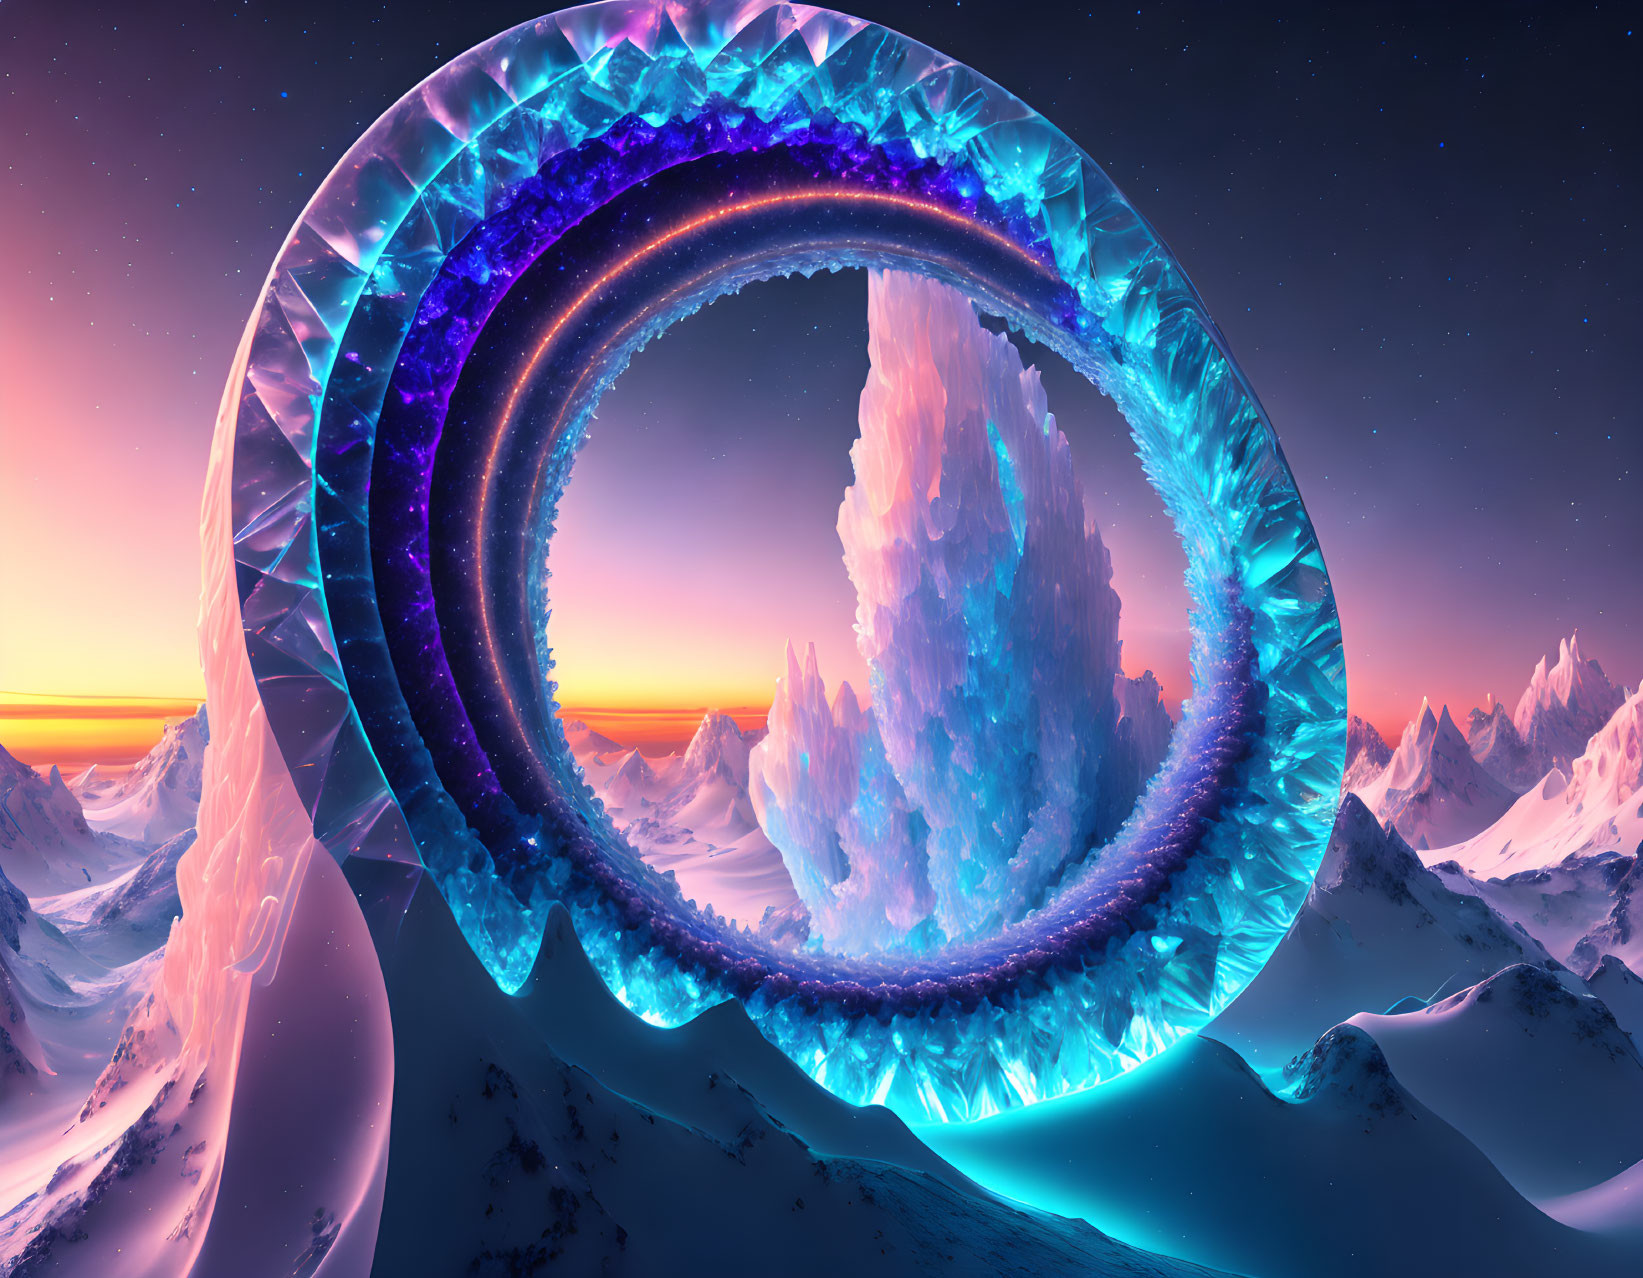 Surreal digital artwork: Glowing crystal portal, vibrant sunset, snowy mountains